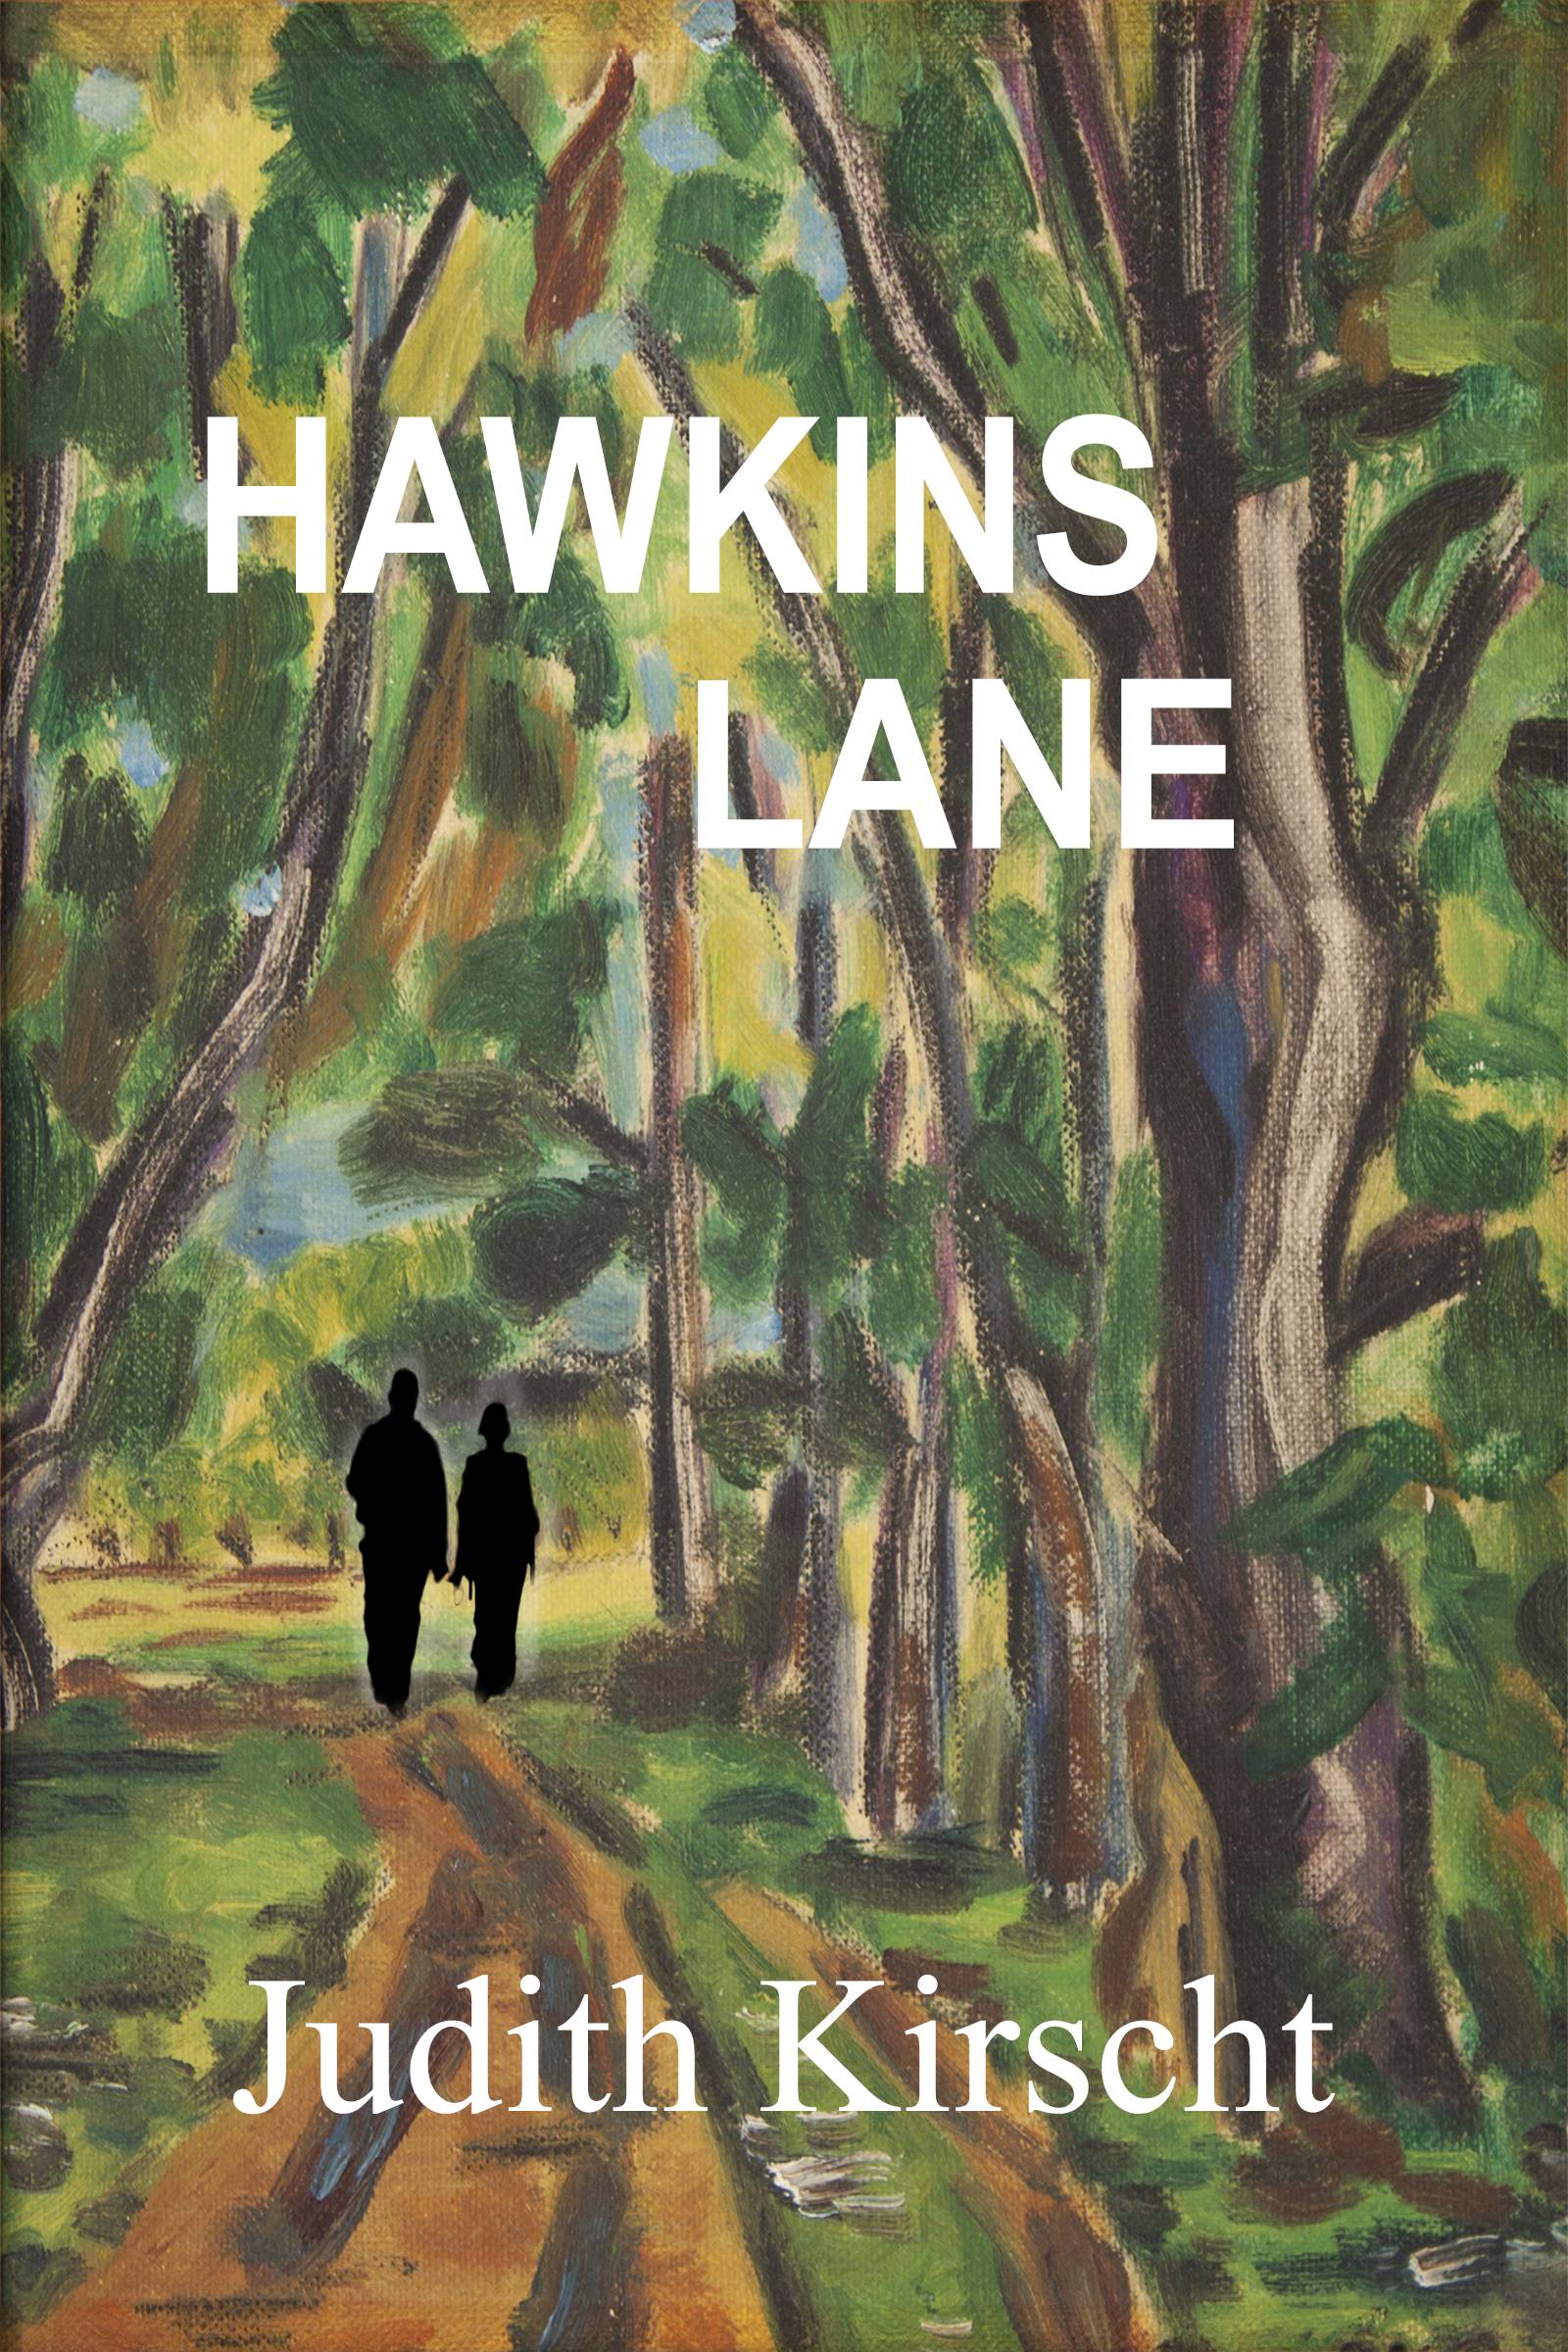 Hawkins Lane by Judith Kirscht